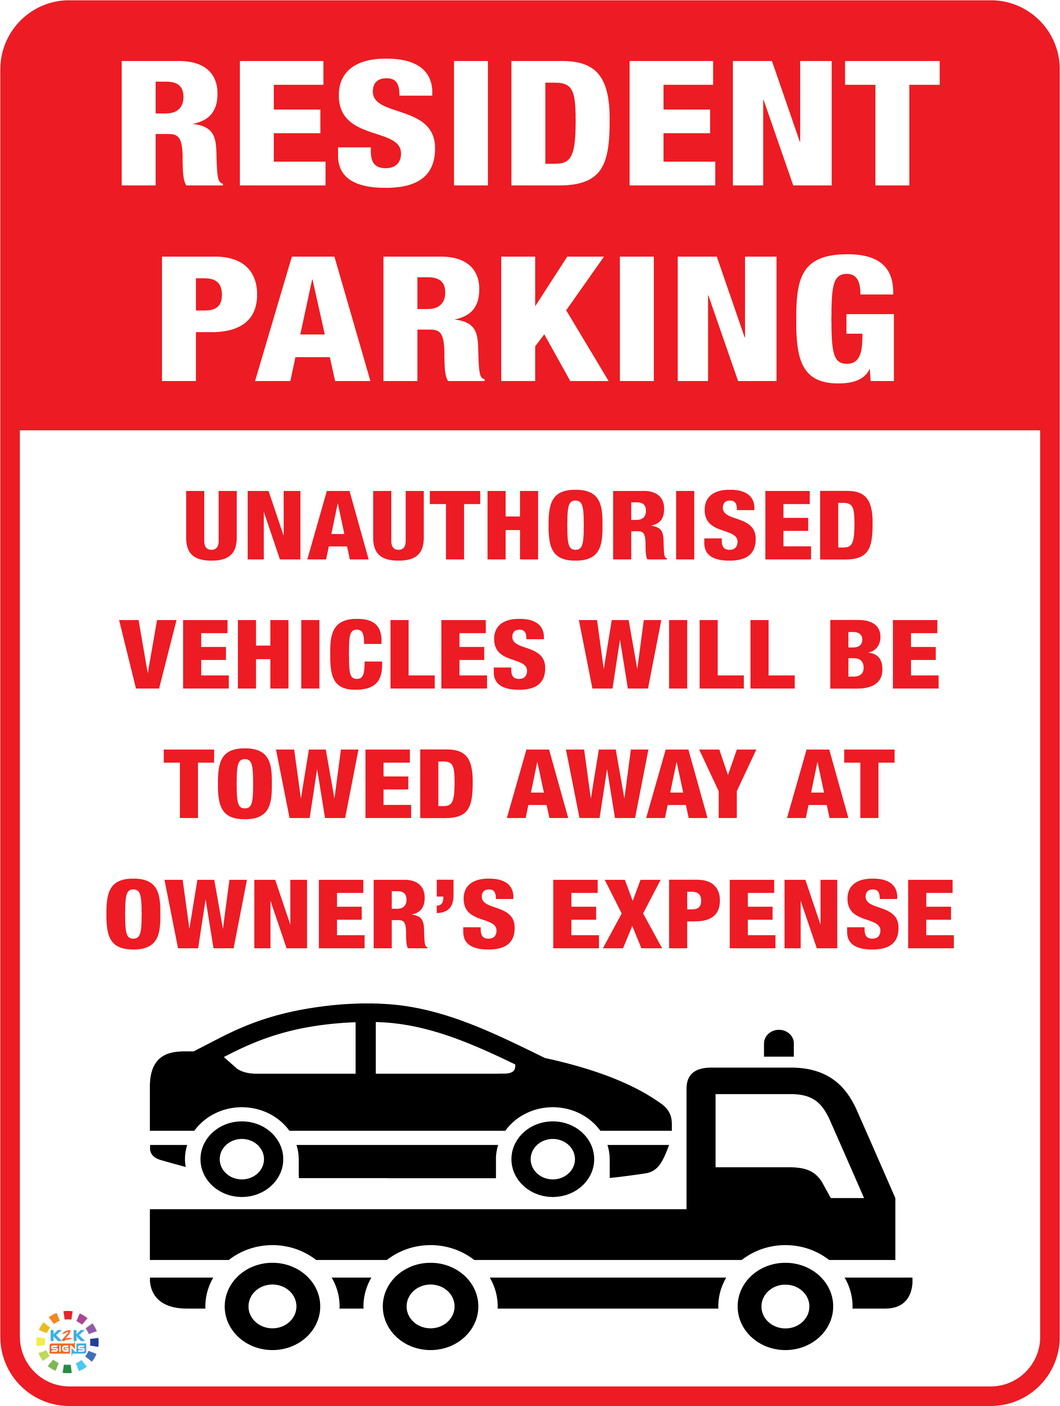 Resident Parking Sign